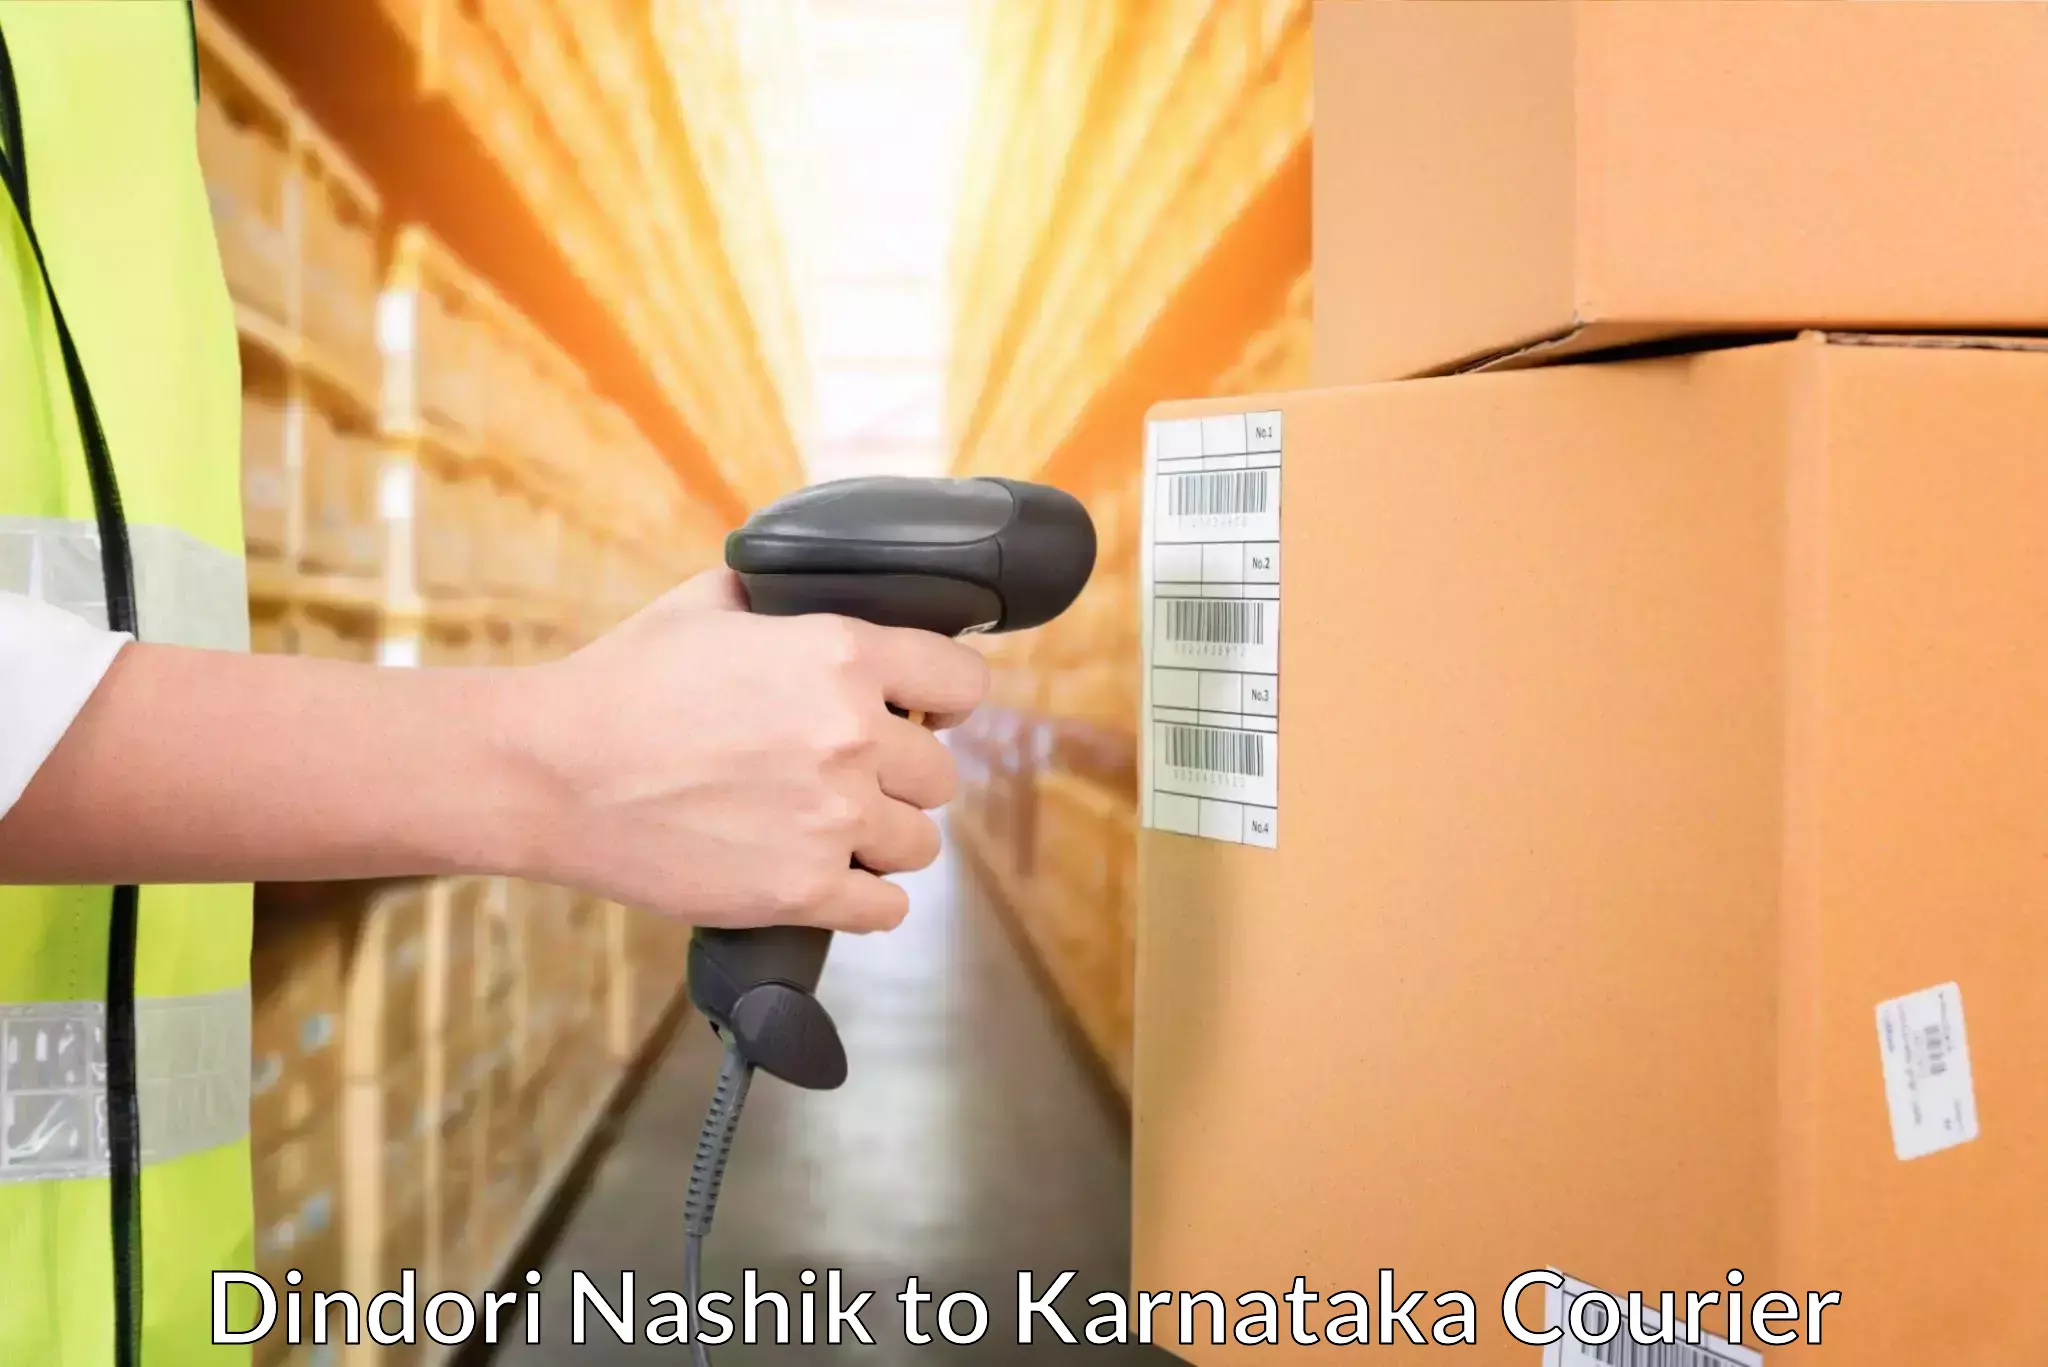 Courier service innovation in Dindori Nashik to Bengaluru